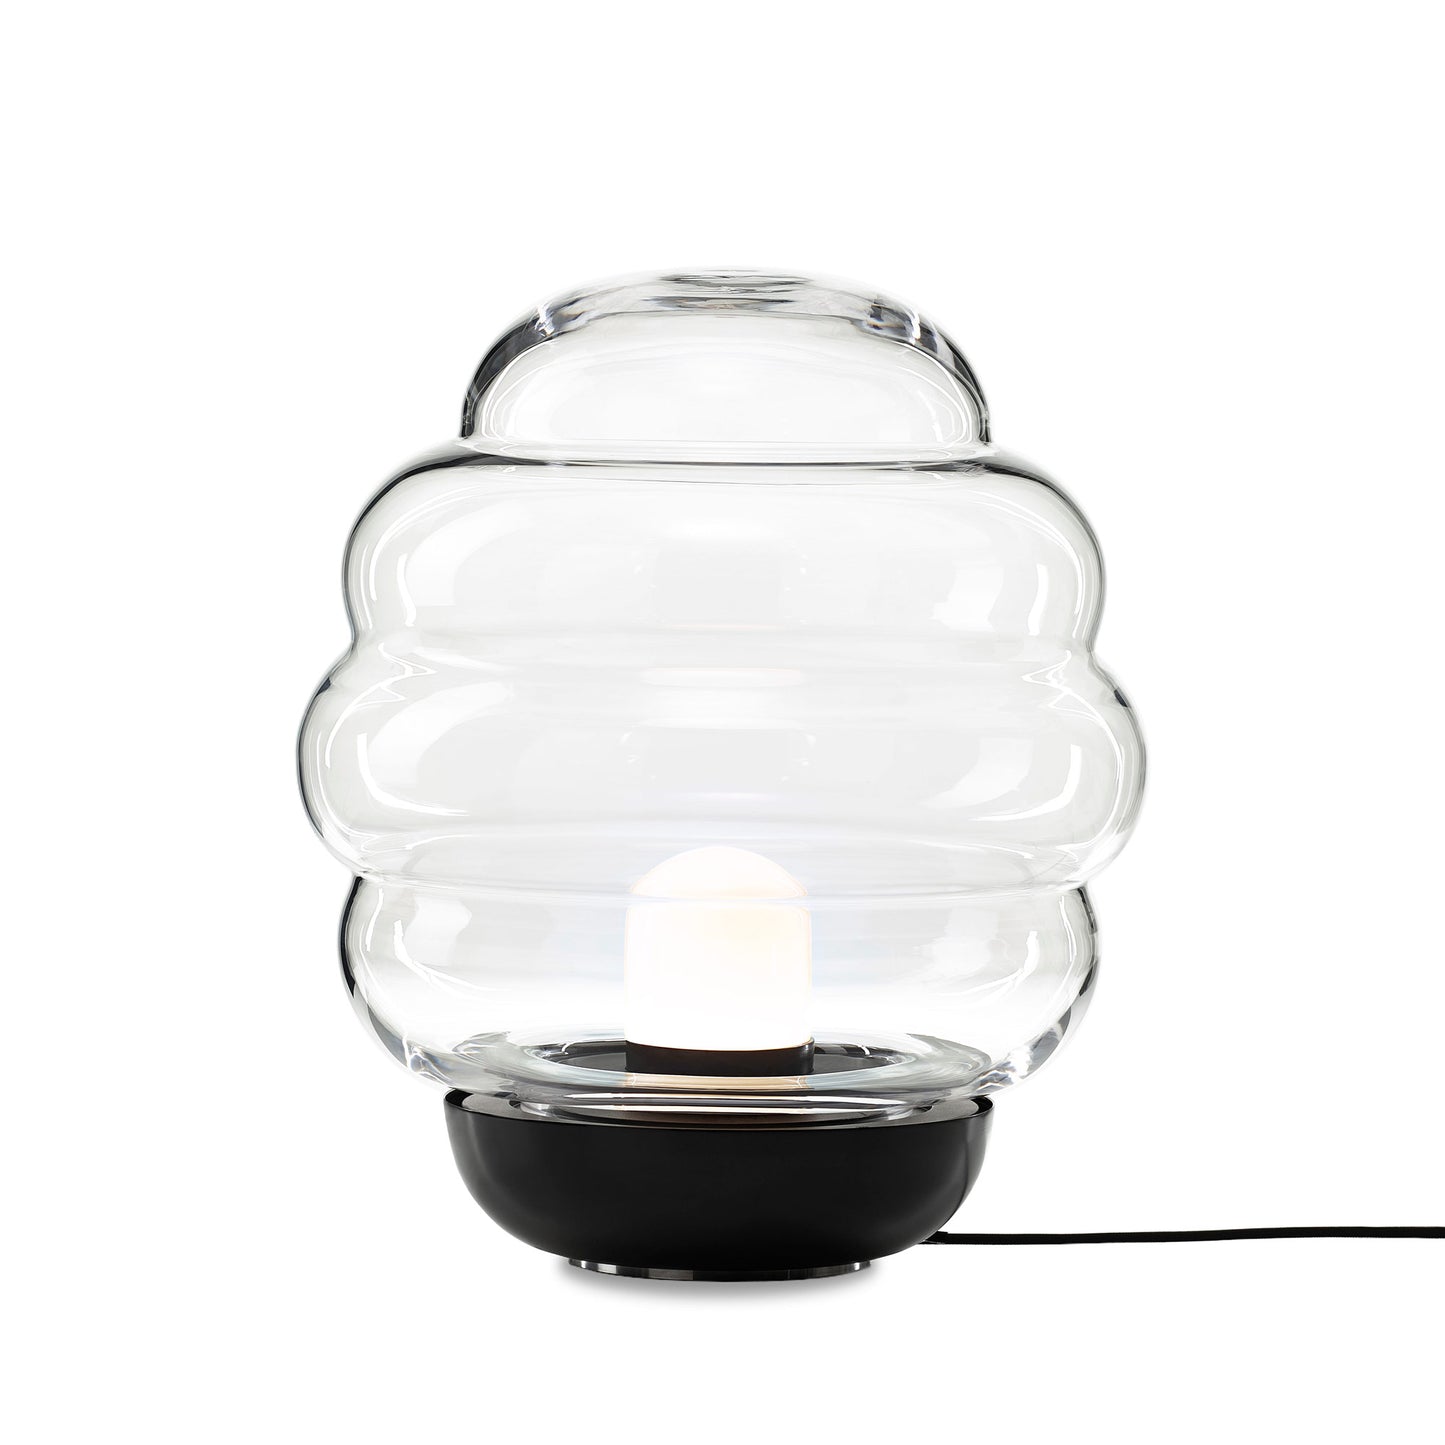 BOMMA - BLIMP FLOOR LAMP MEDIUM - from $3,378.50